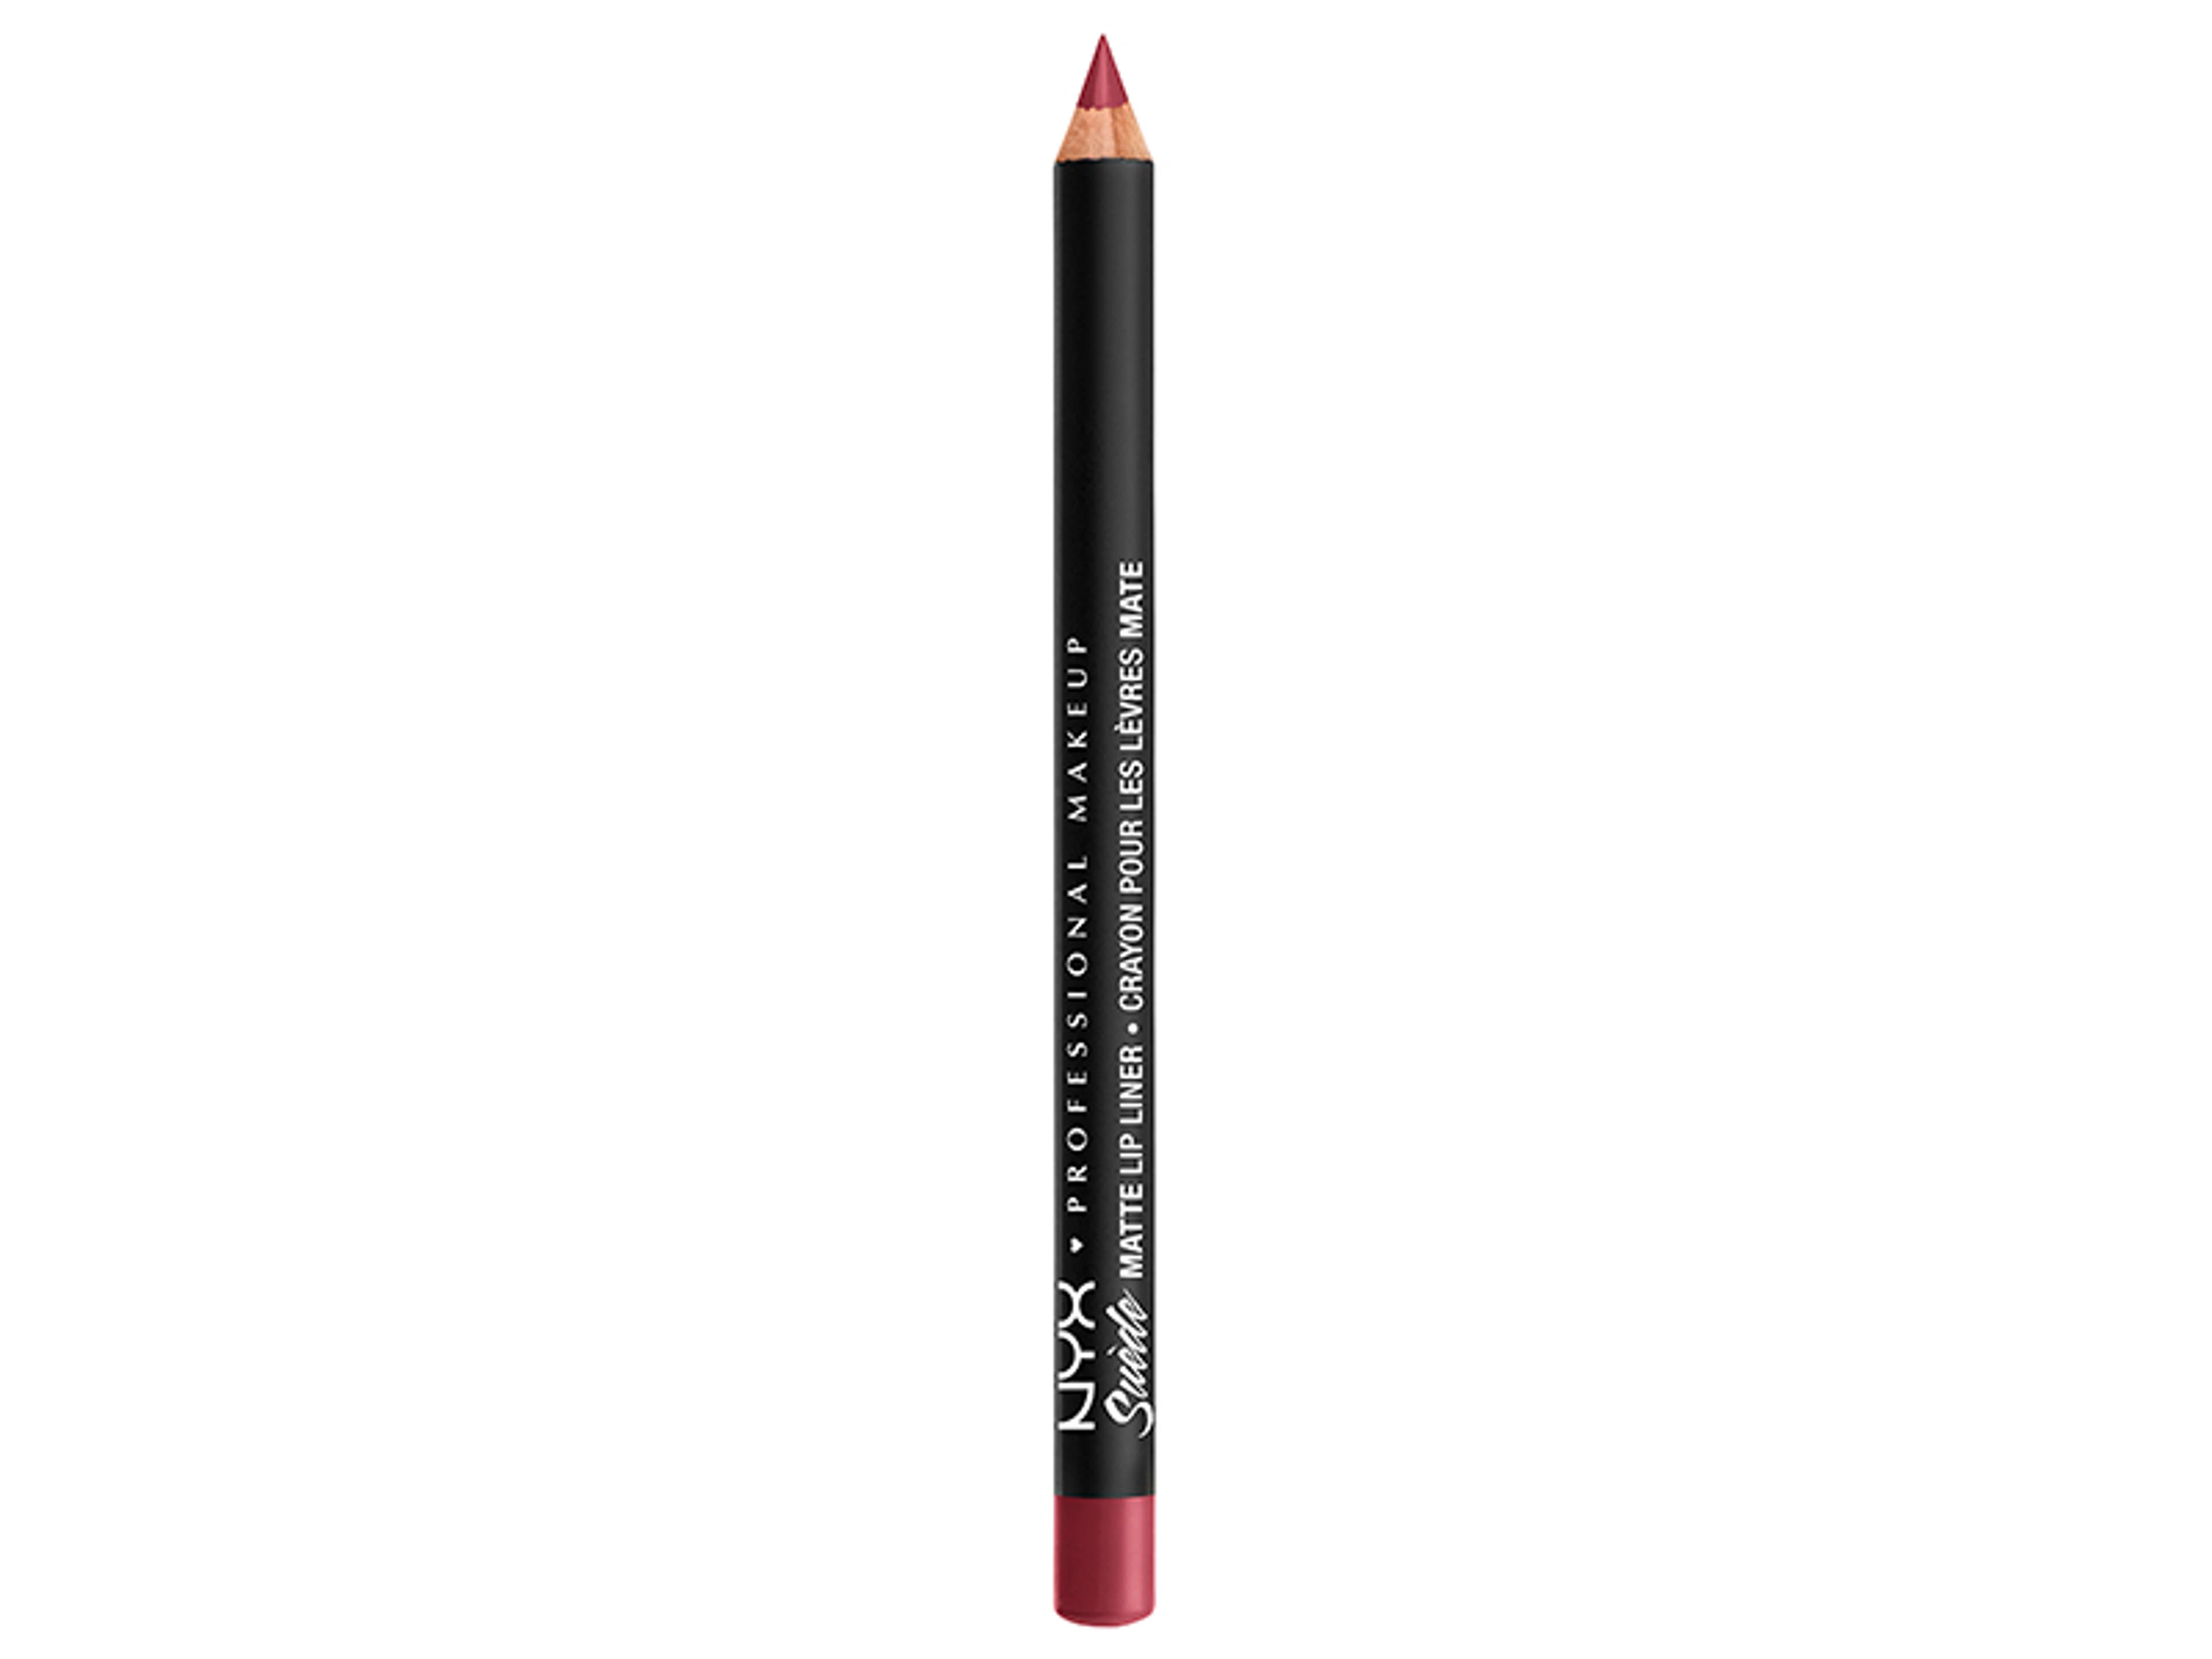 NYX Professional Makeup Suede Matte Lip Liner ajakkontúr ceruza, Cherry Skies - 1 db